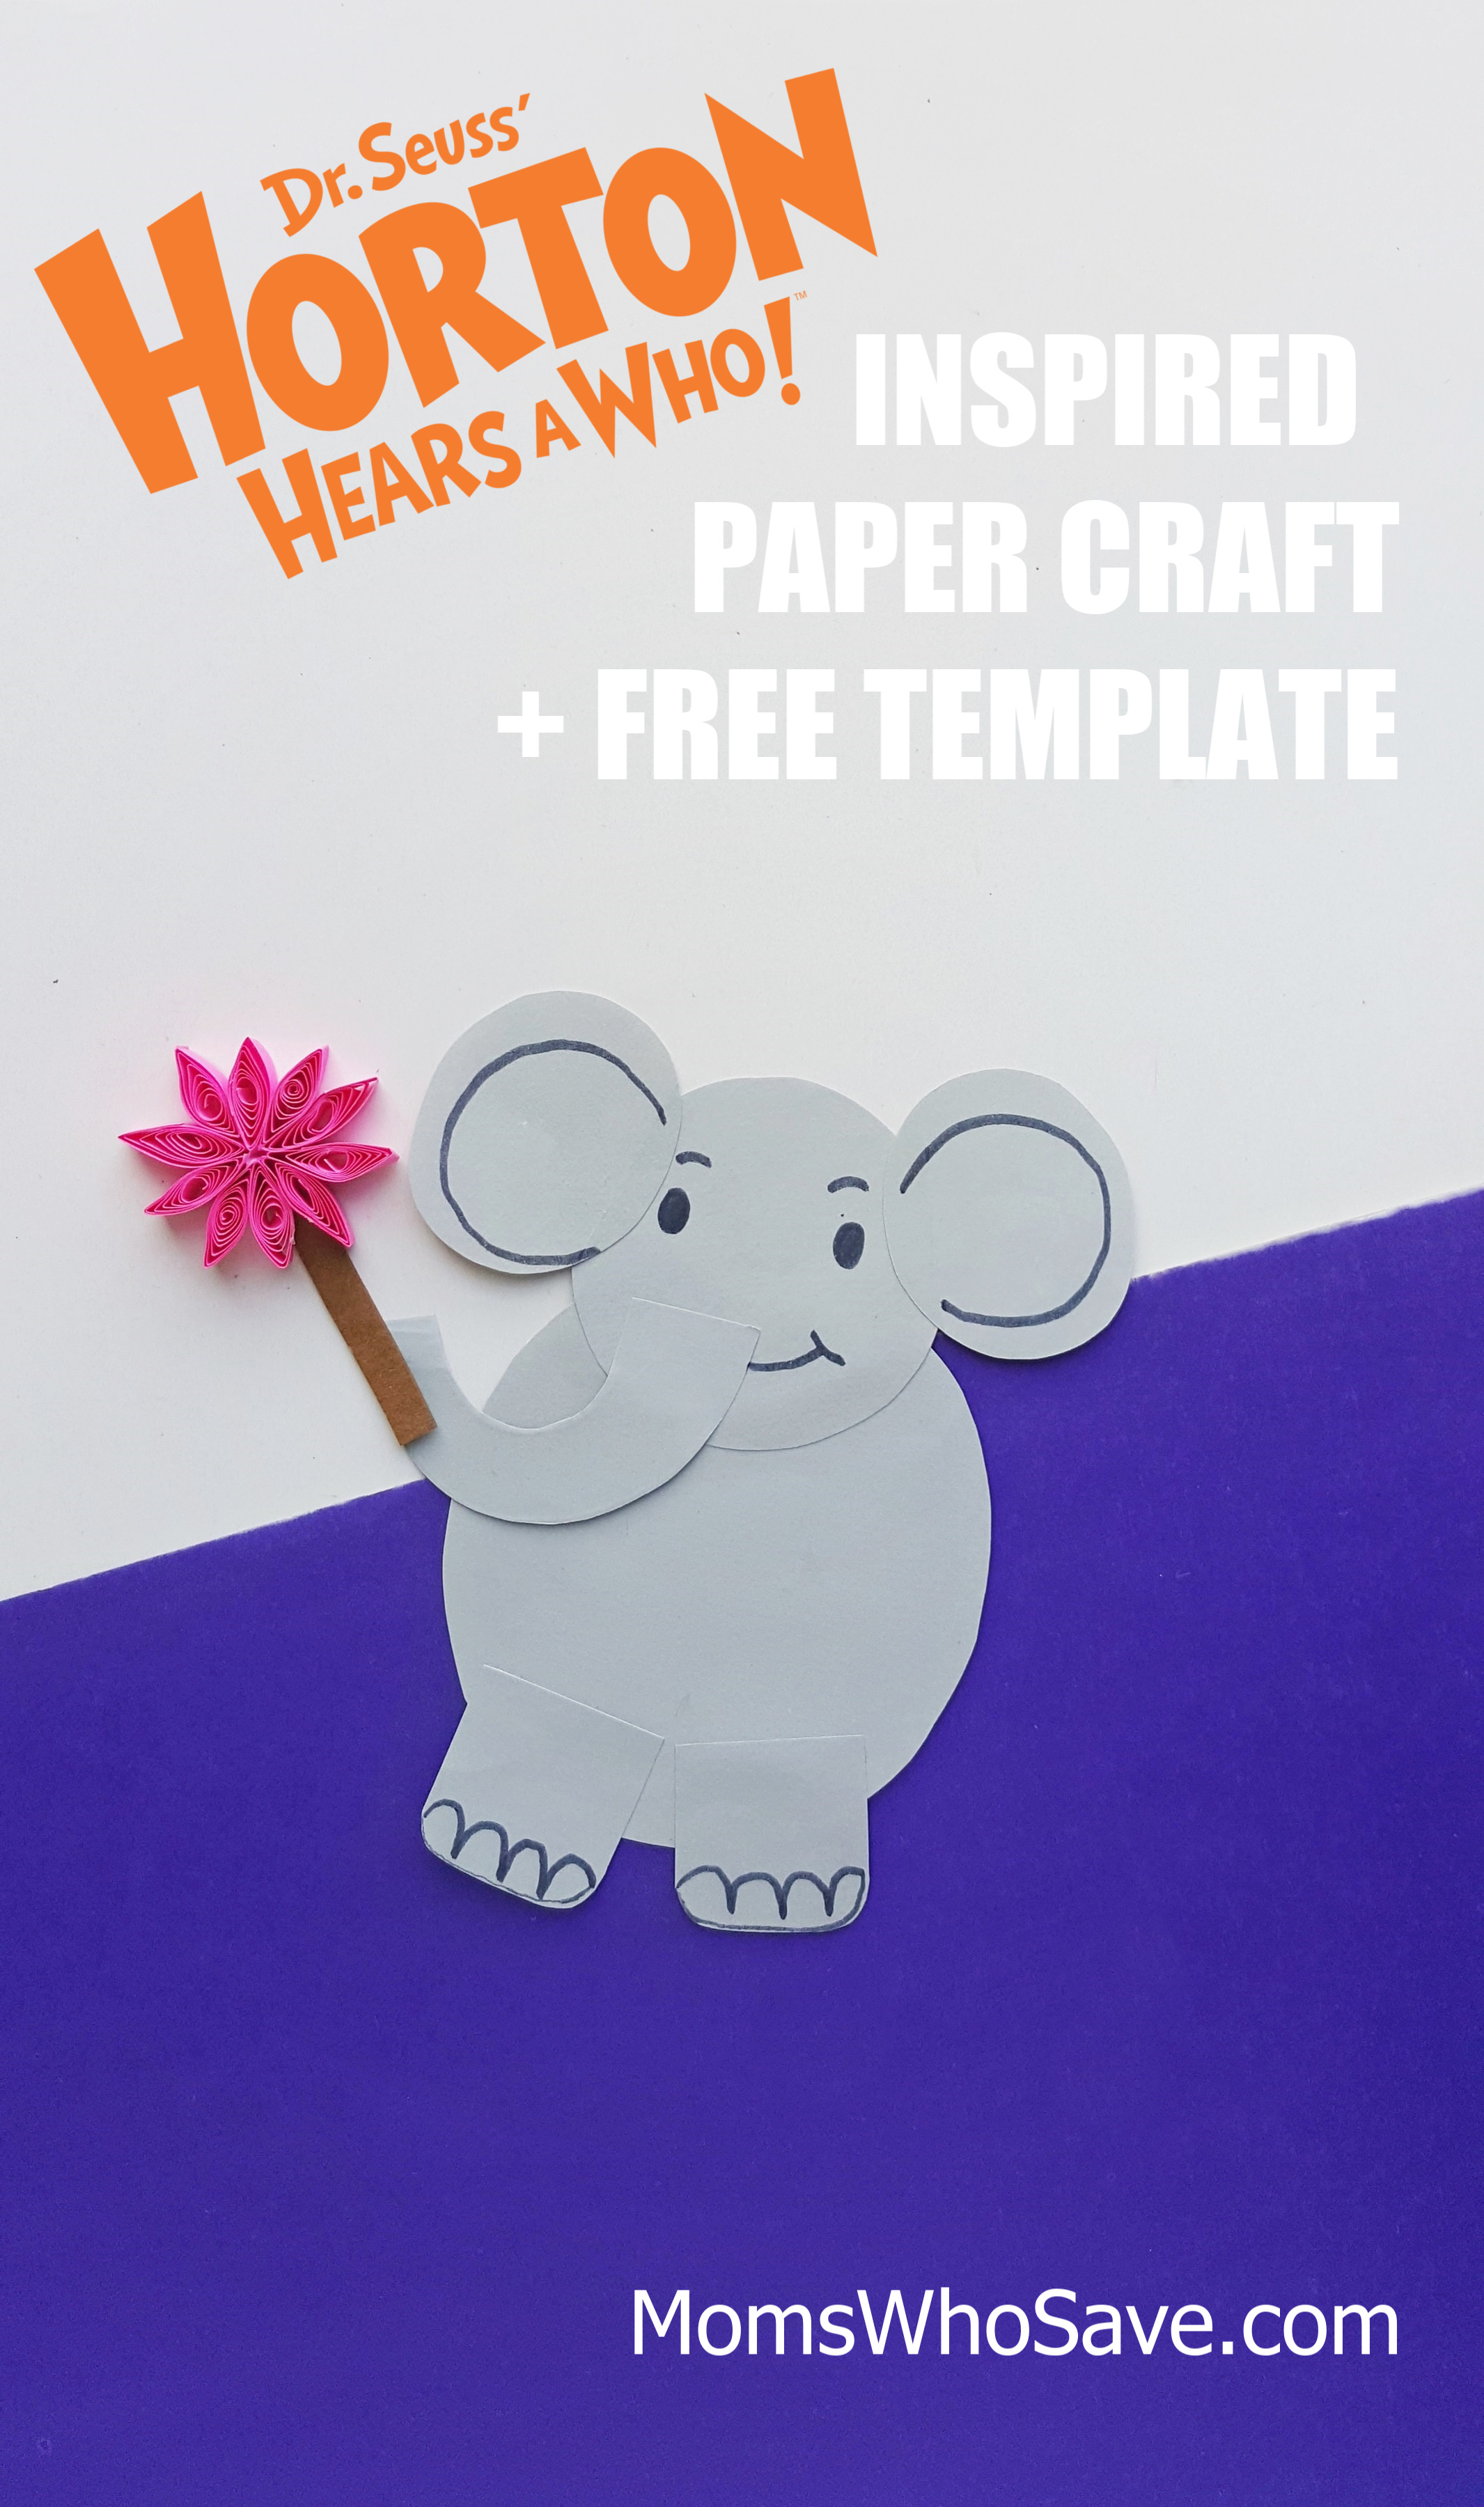 Dr. Seuss' Horton Hears a Who! paper craft